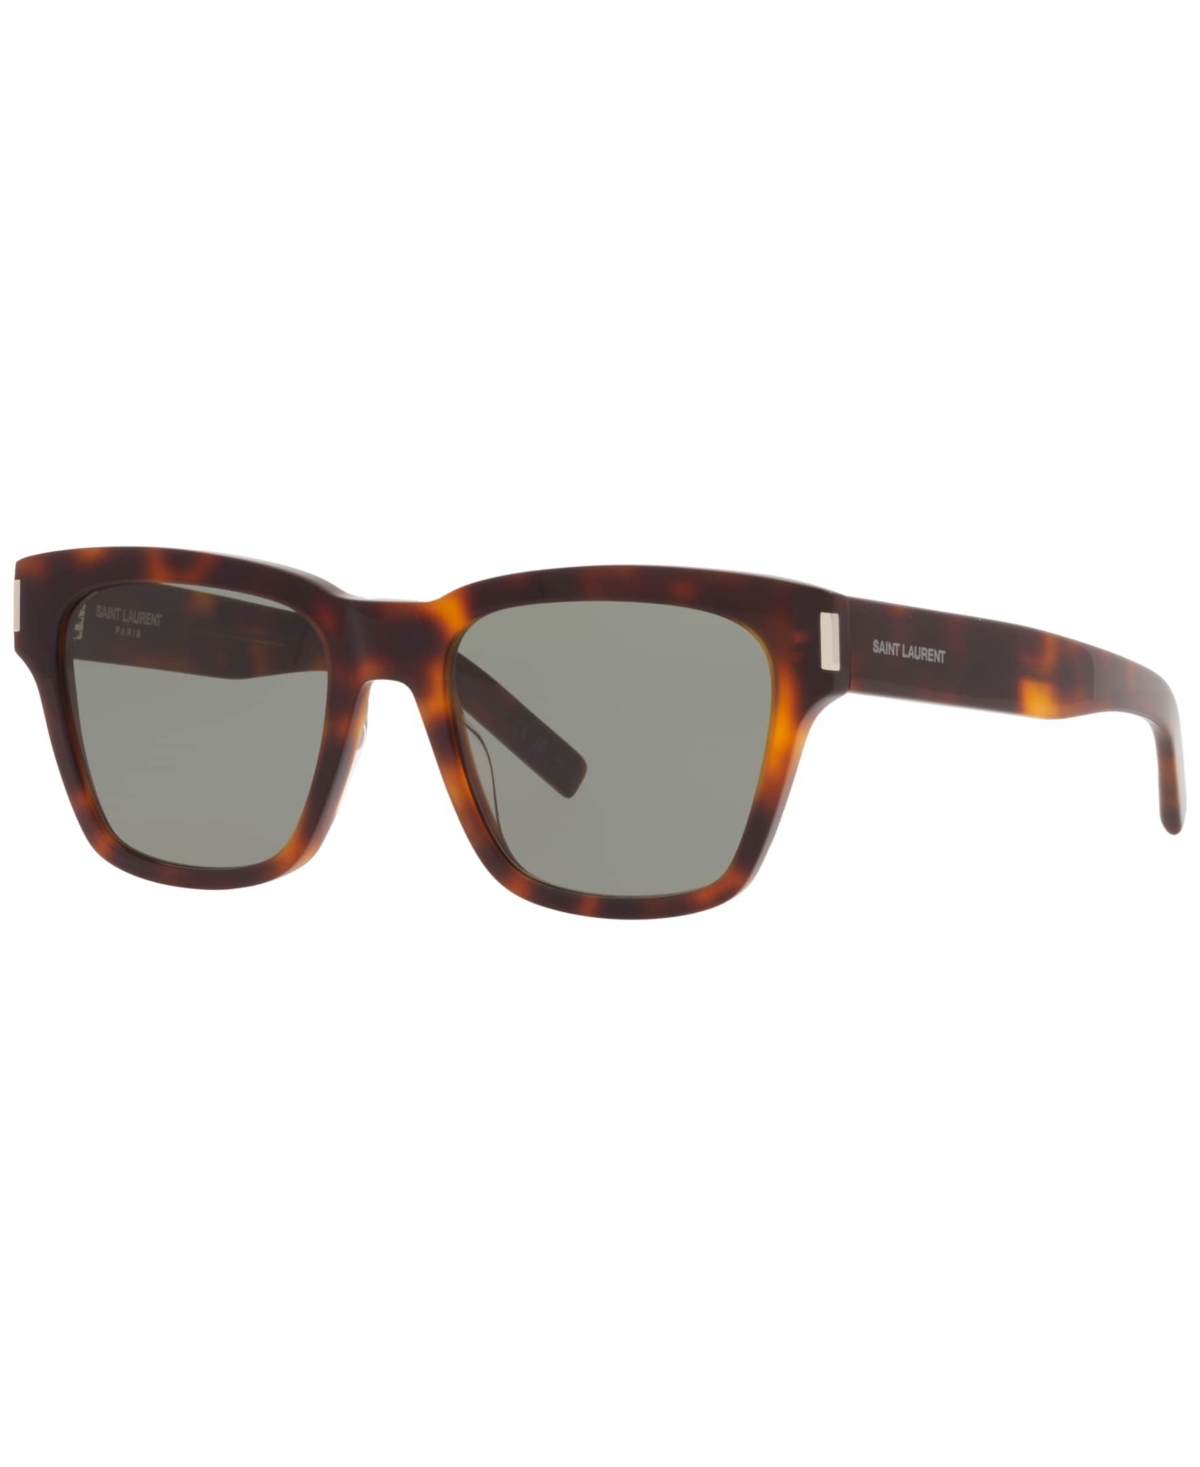 Saint Laurent Unisex Sunglasses, Sl 560 In Brown Light